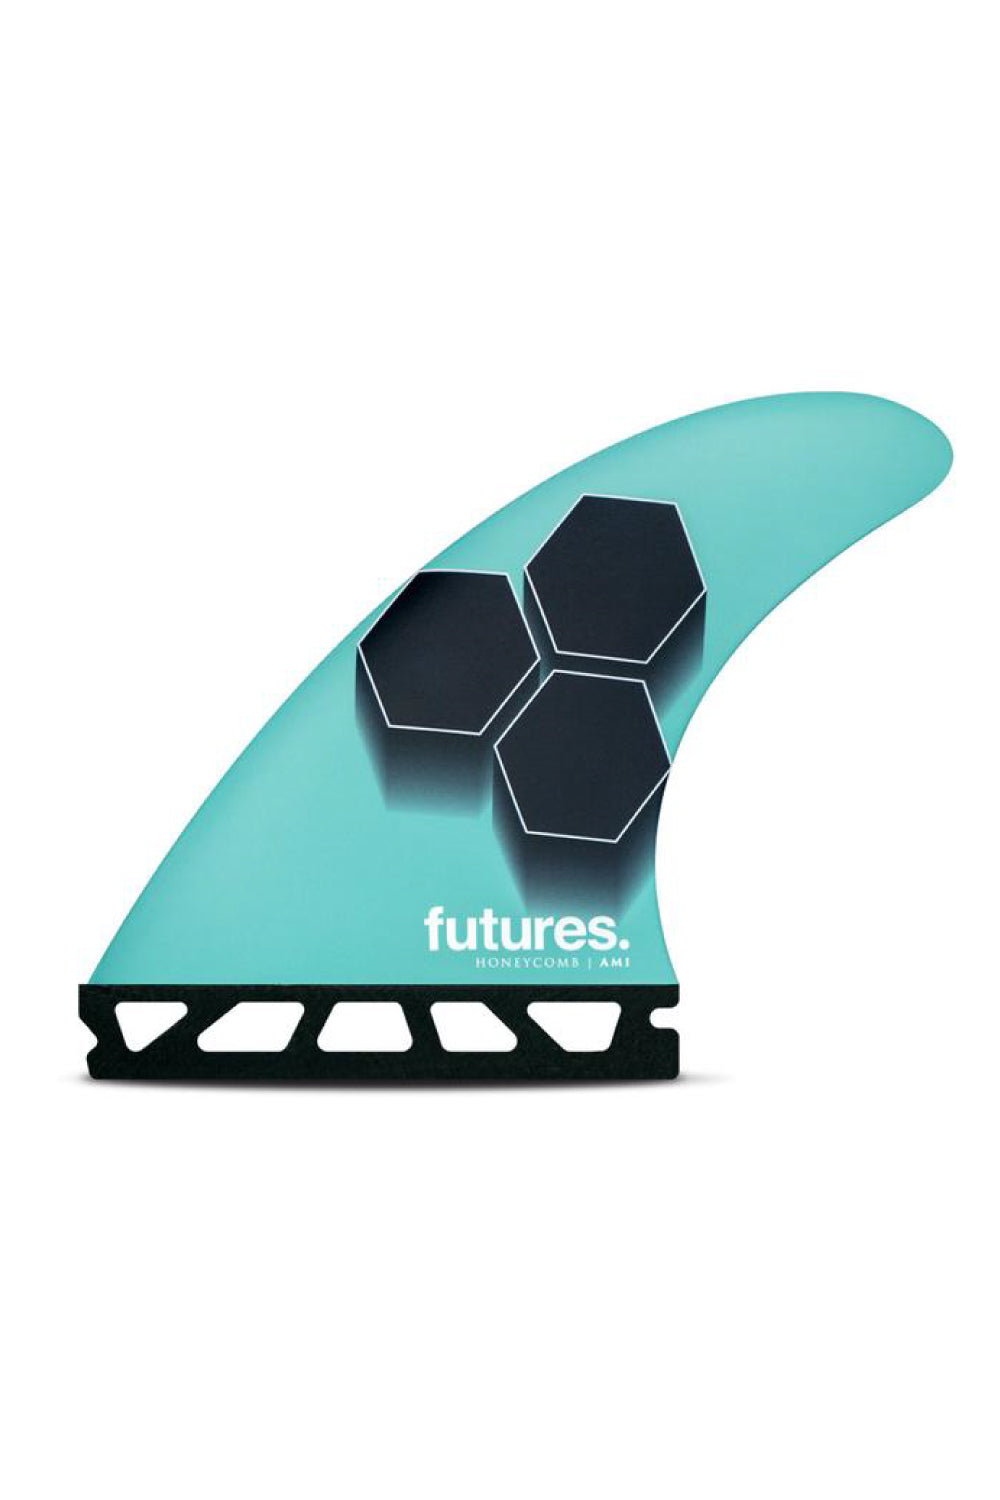 Futures Fins AM1 Honeycomb Medium Thruster Fin Set - Teal/Navy